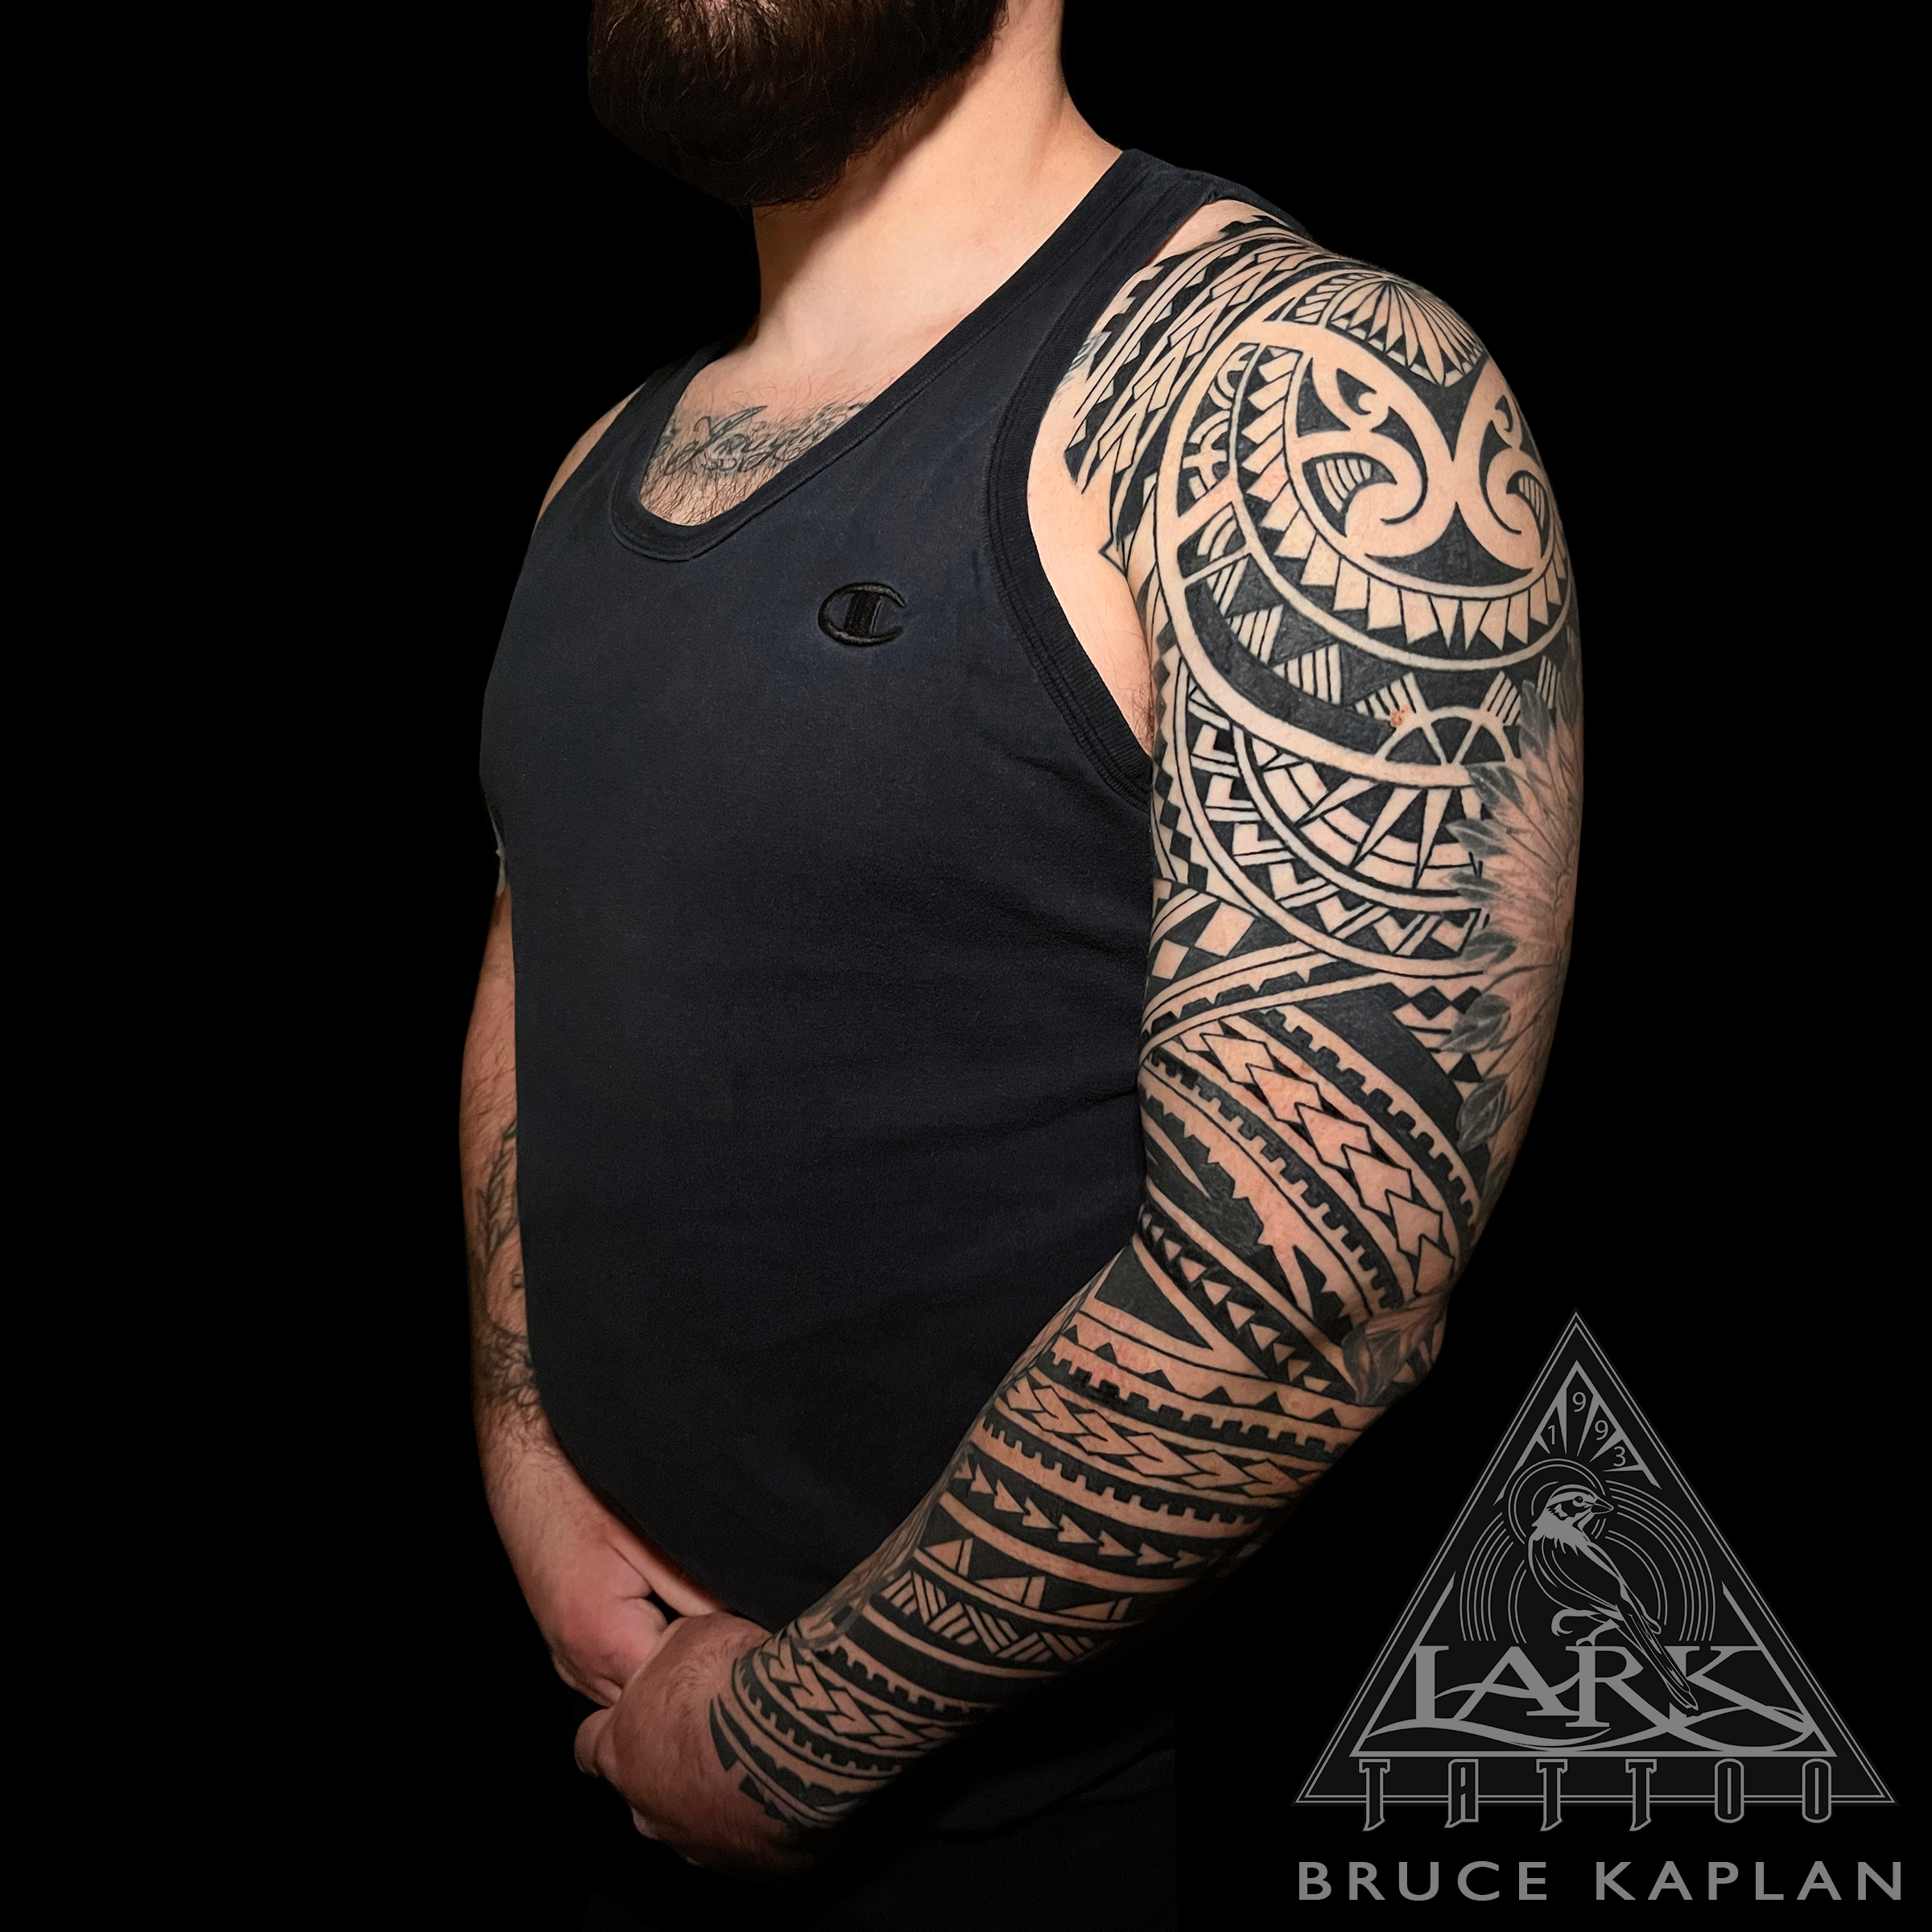 #Polynesian #PolynesianTattoo #LarkTattoo #BruceKaplan #BruceKaplanLarkTattoo #Tattoo #Tattoos #TattooArtist #Tattoist #Tattooer #LongIslandTattooArtist #LongIslandTattooer #LongIslandTattoo #TattooOfTheDay #Tat #Tats #Tatts #Tatted #Inked #Ink #TattooInk #AmazingInk #AmazingTattoo #BodyArt #LarkTattooWestbury #Westbury #LongIsland #NY #NewYork #USA #Art #Tattedup #InkedUp #LarkTattoos